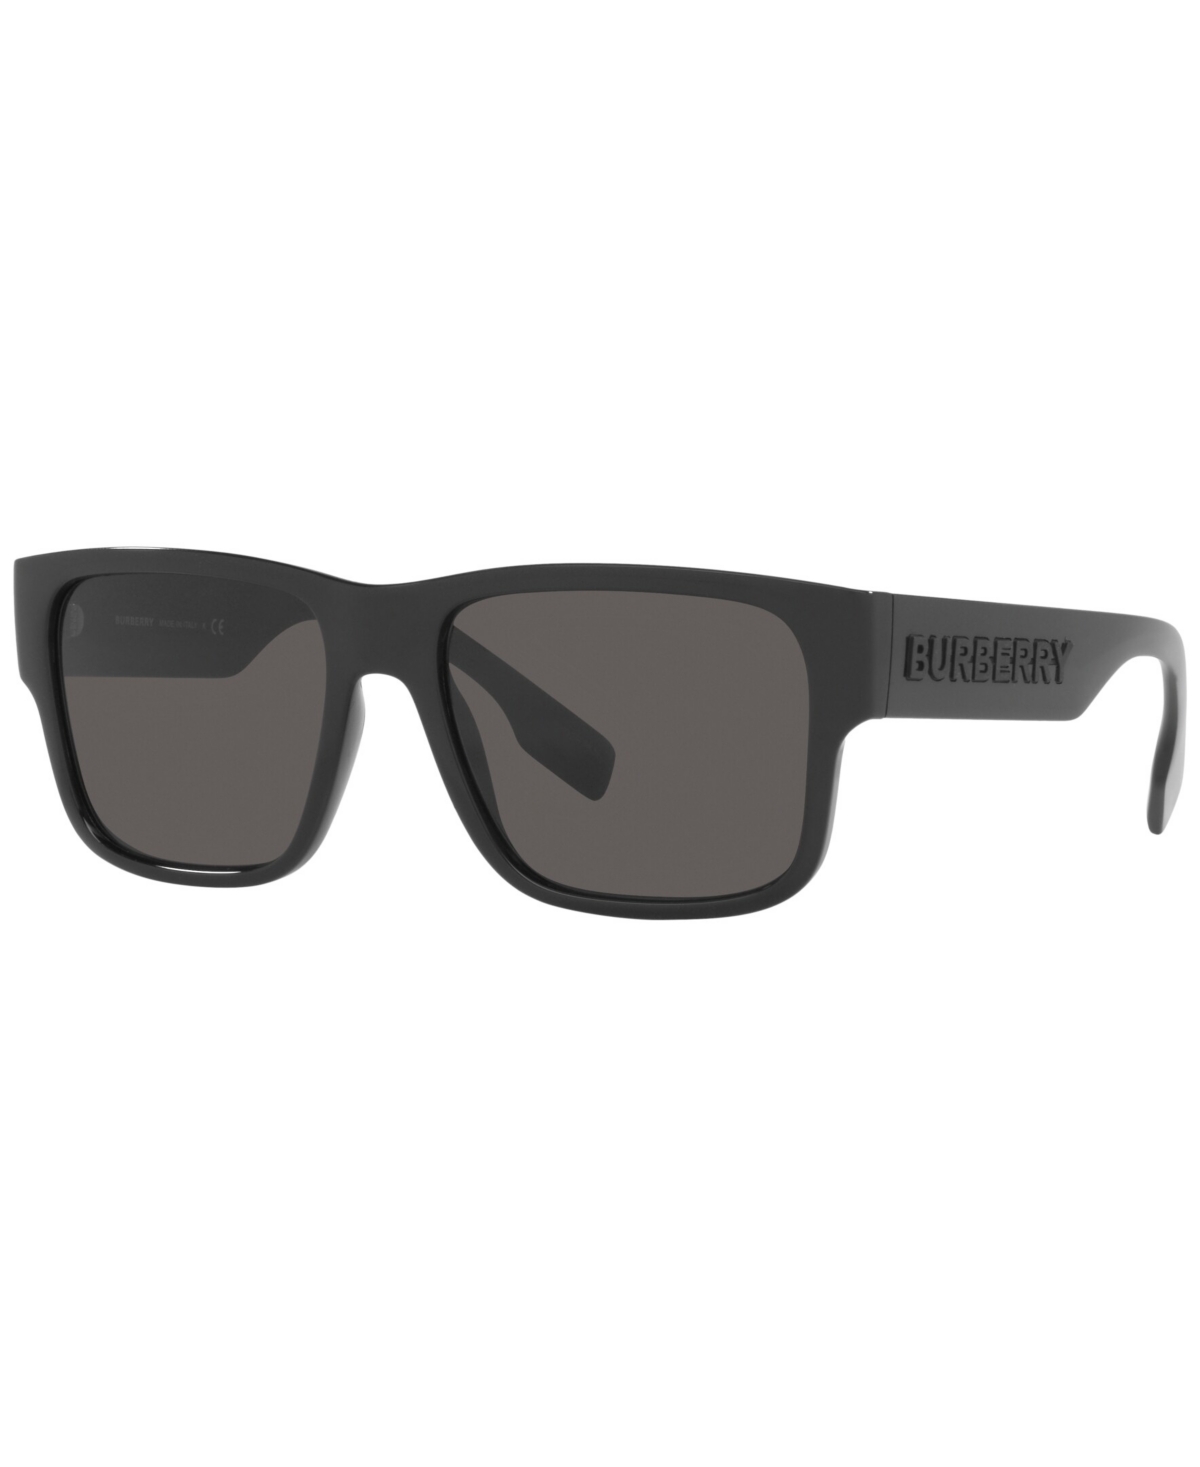 Men's Sunglasses, BE4358 Knight - Black